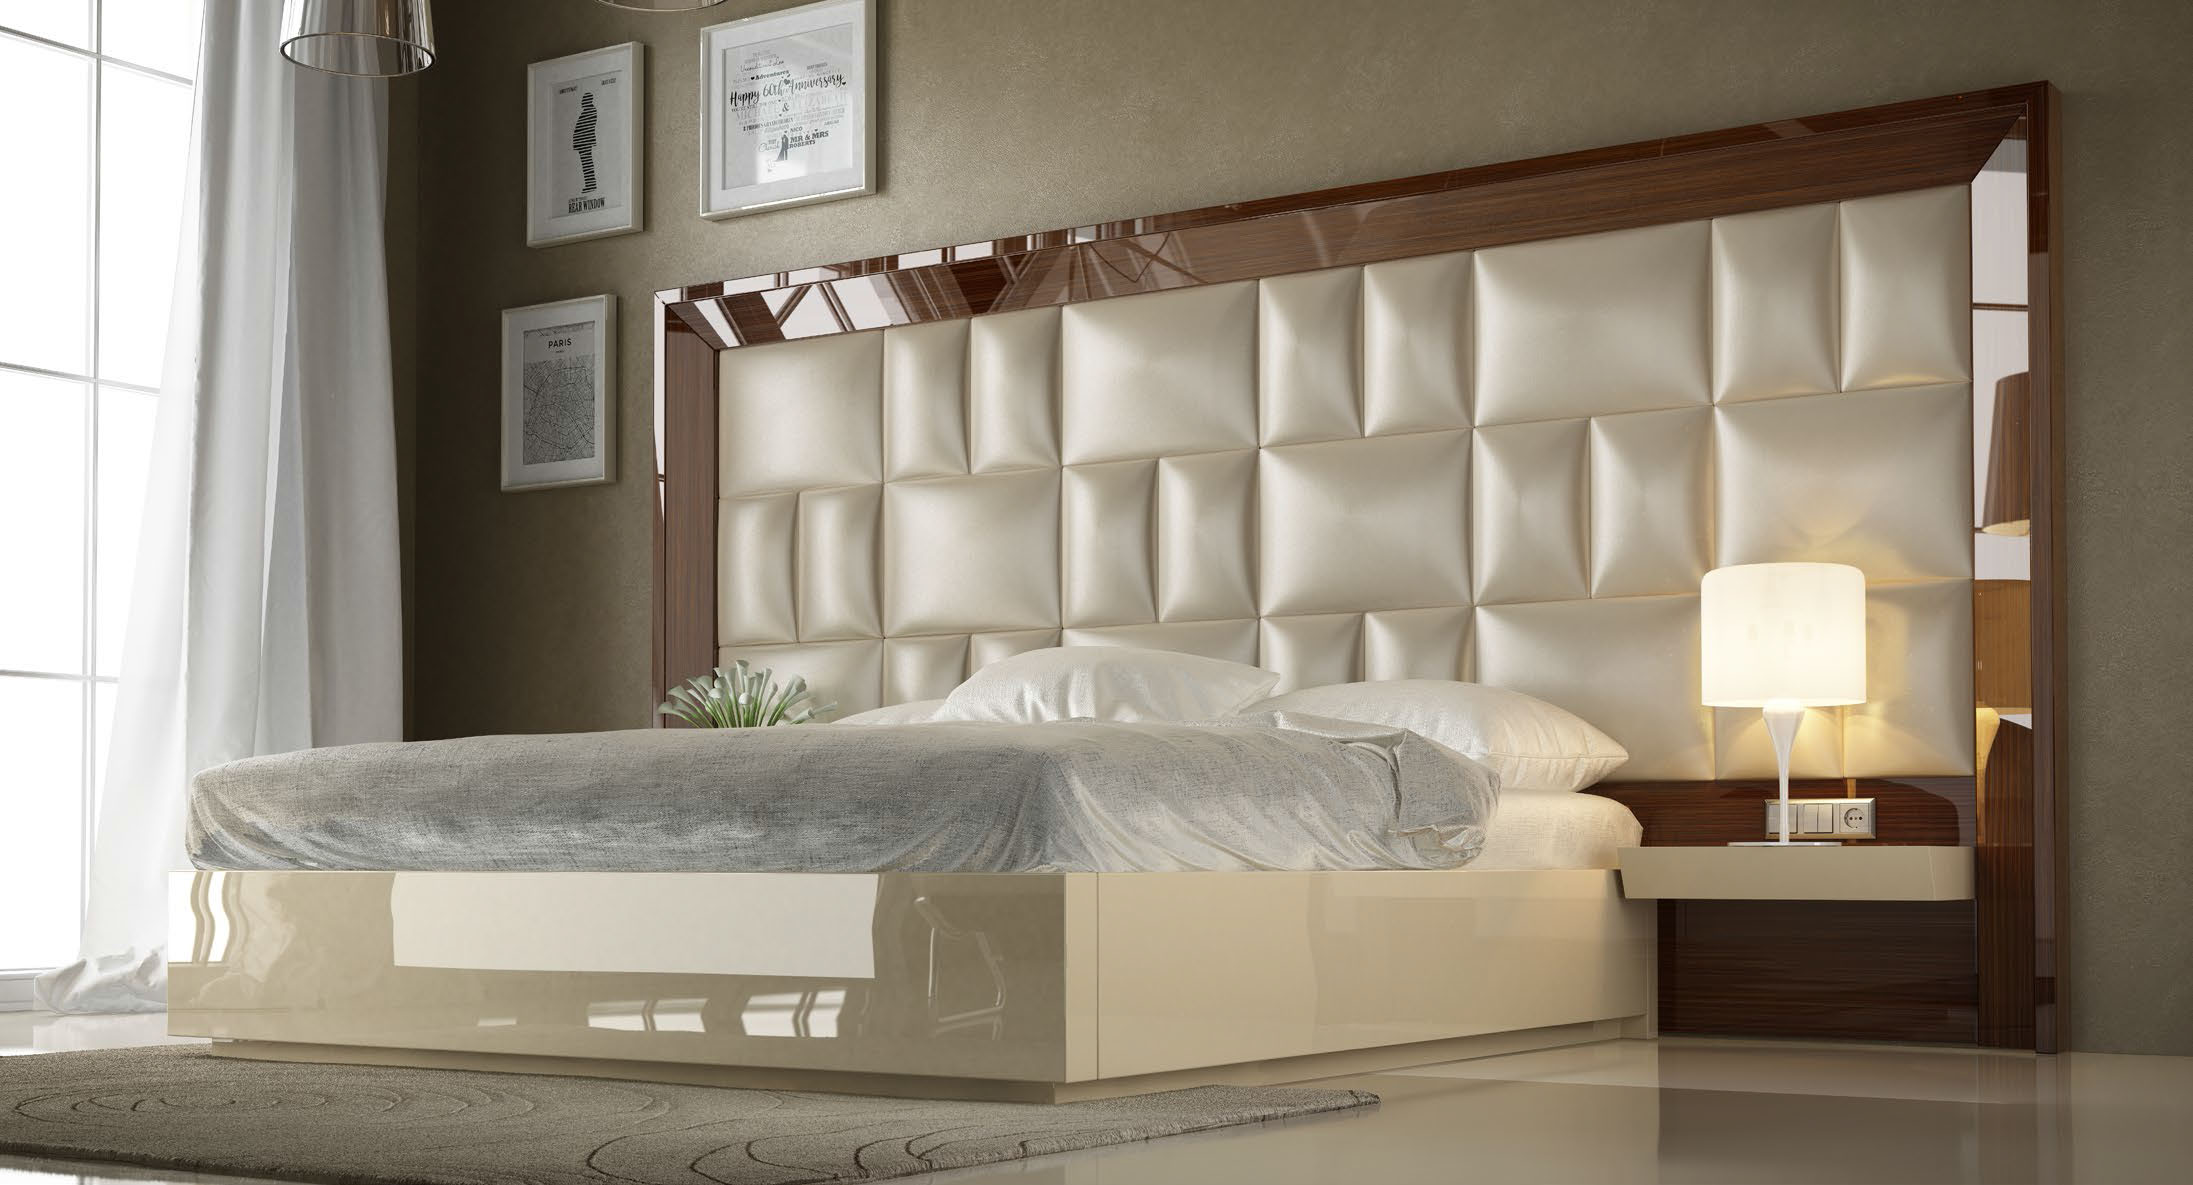 Brands Franco Furniture Bedrooms vol1, Spain DOR 132